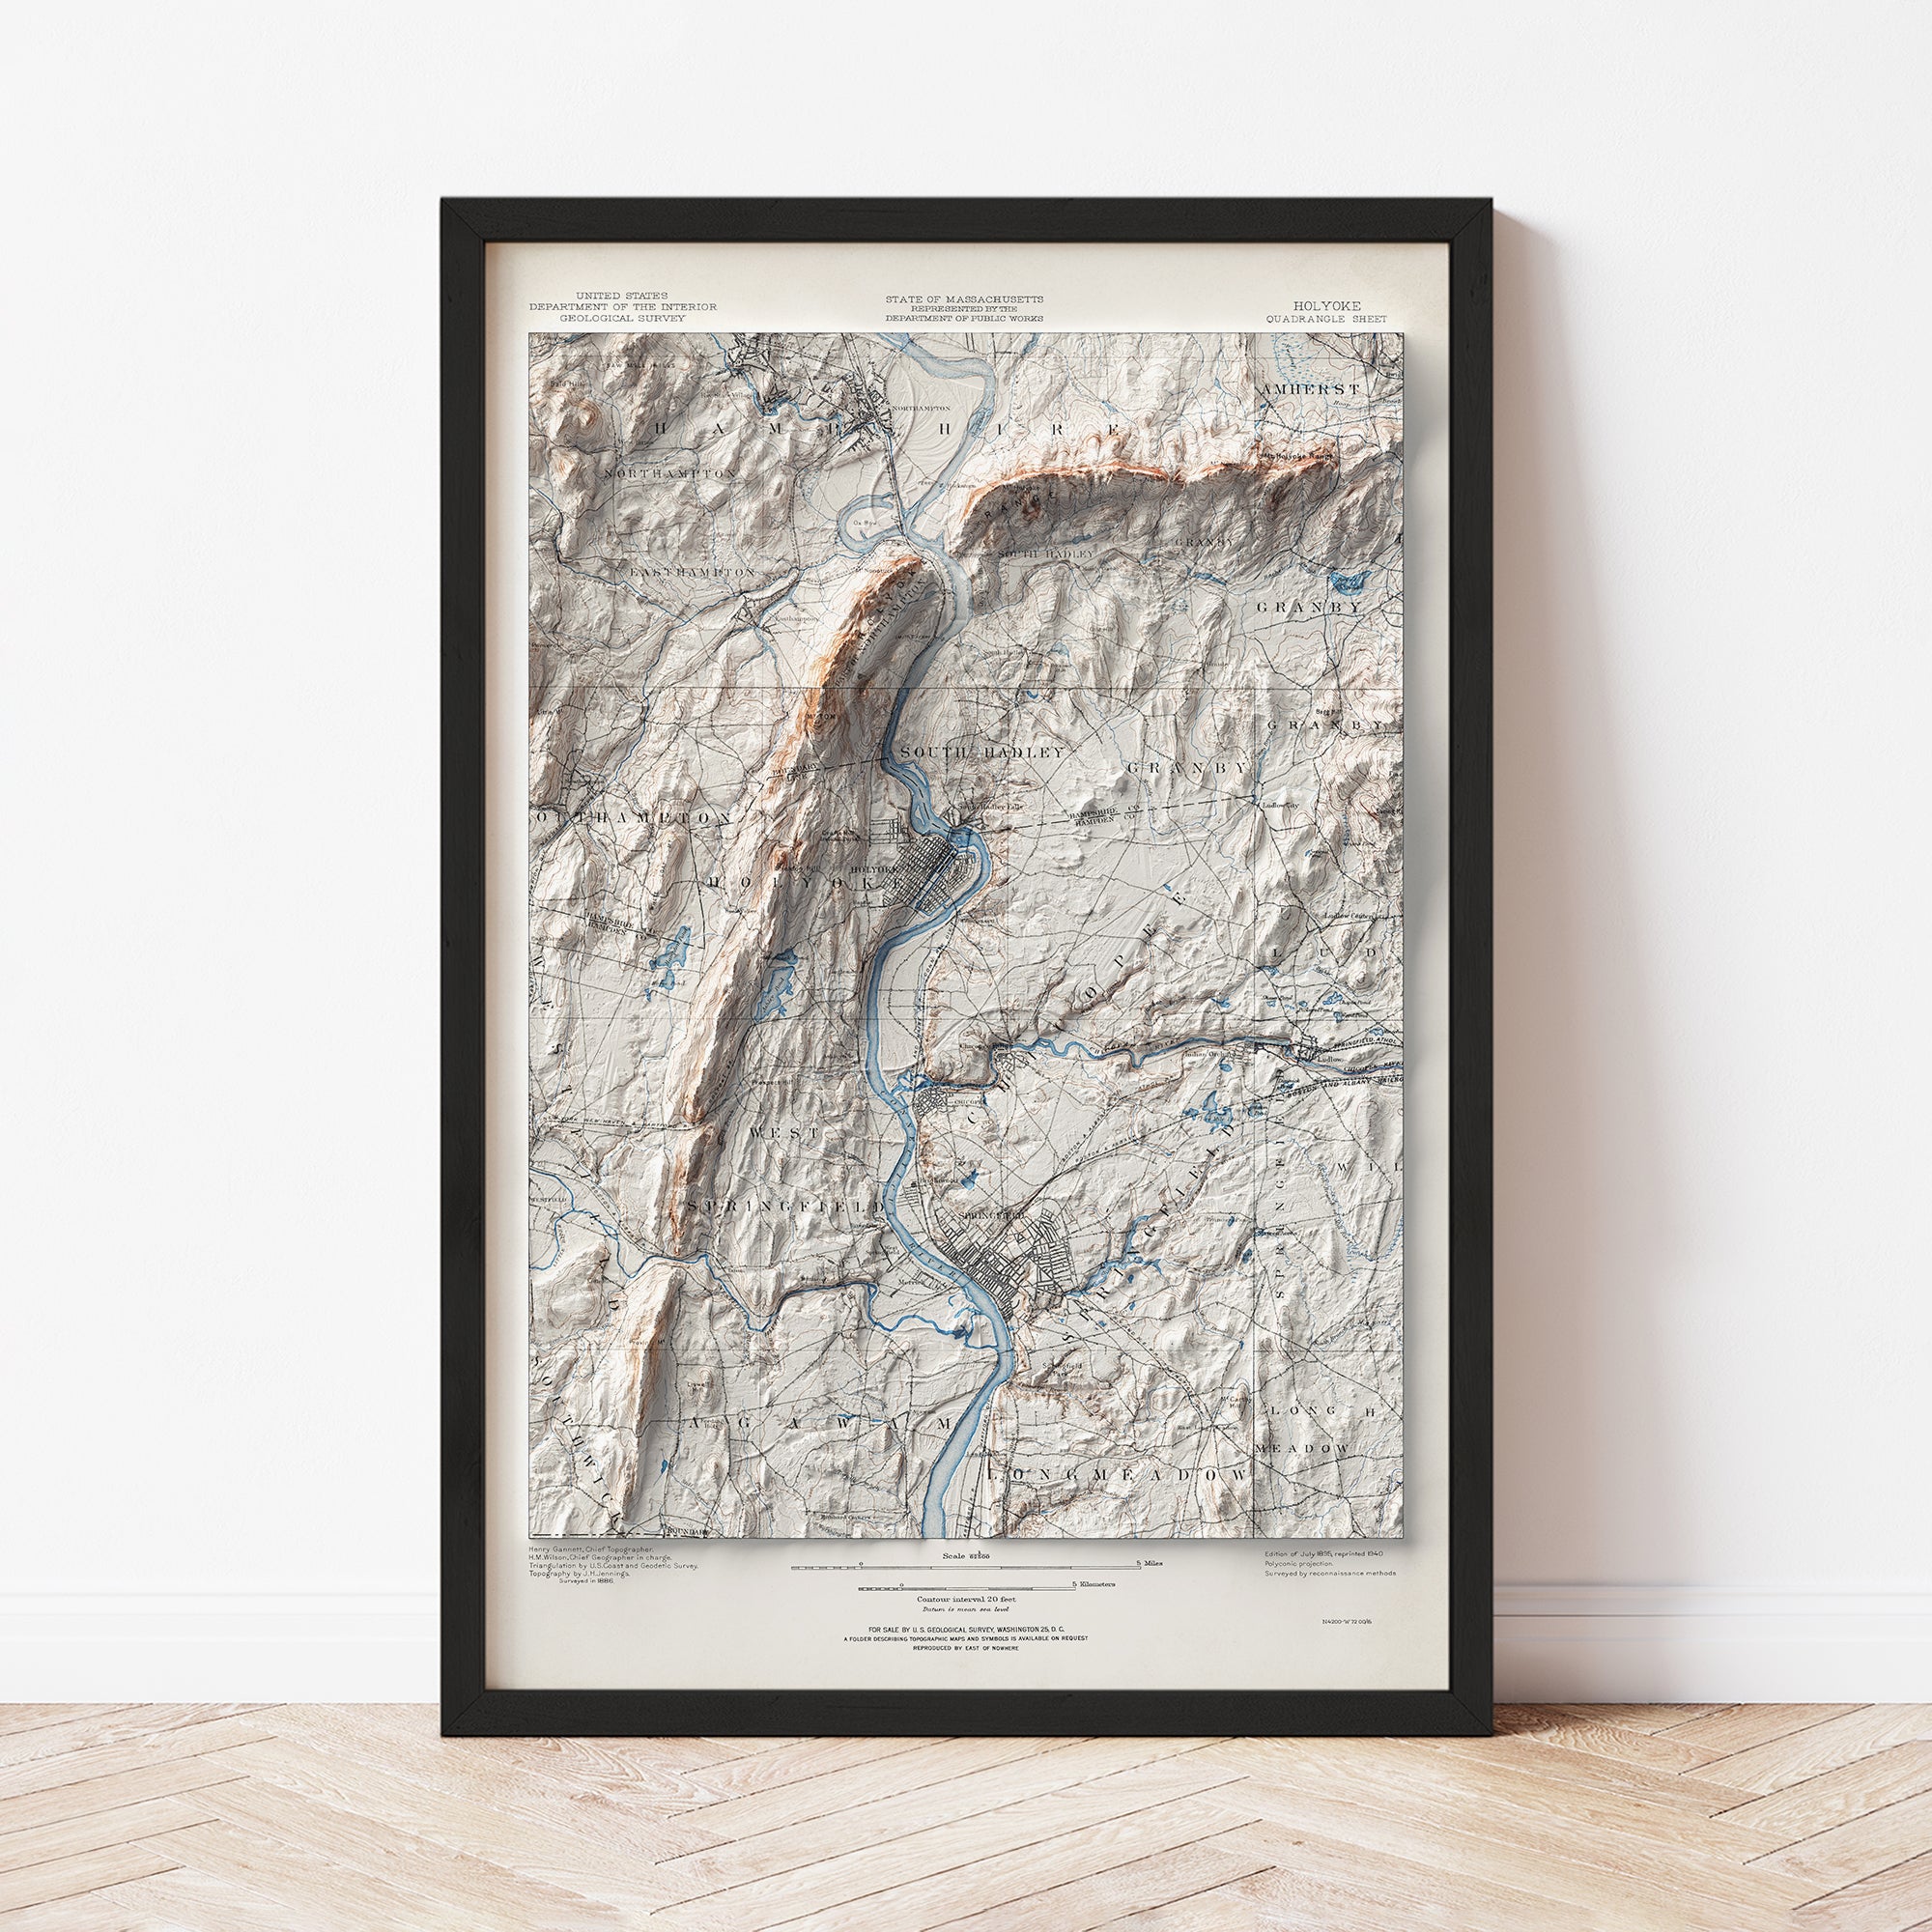 Holyoke Range, MA - Vintage Shaded Relief Map (1895)